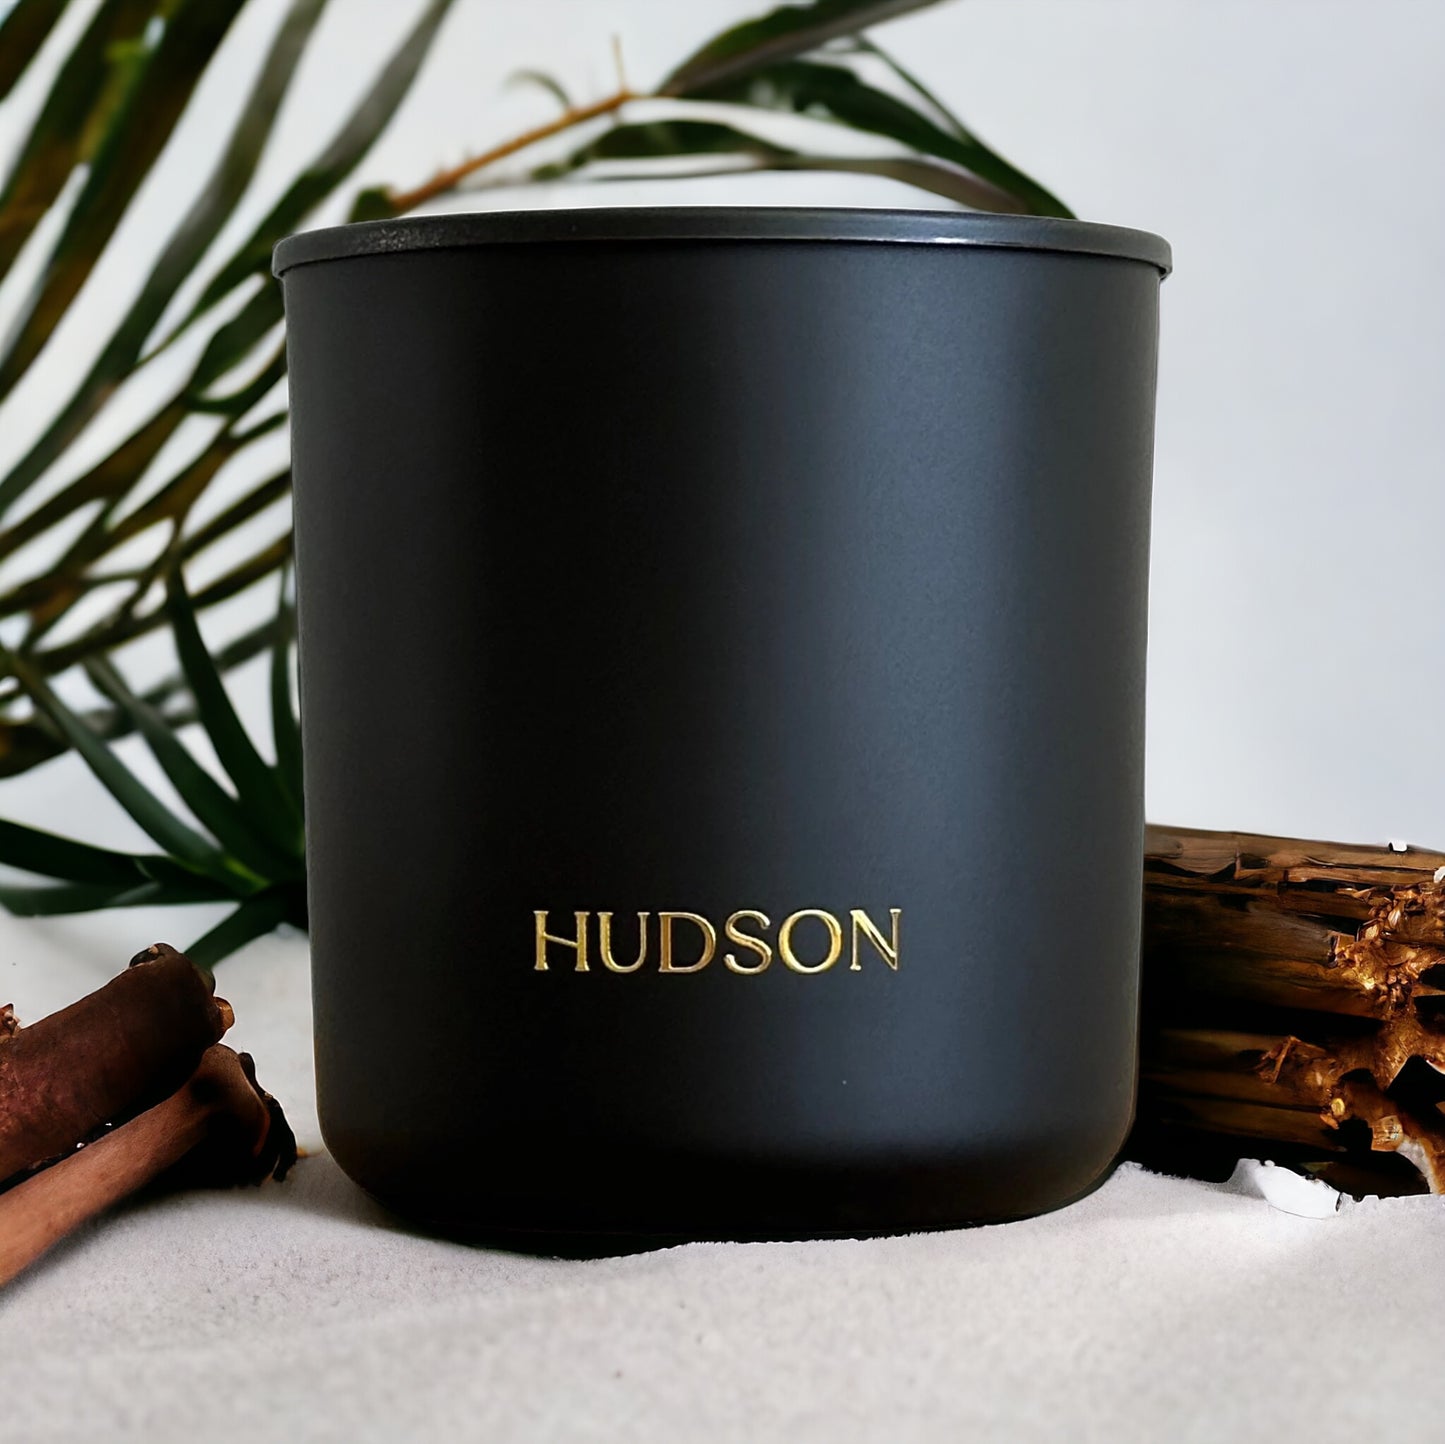 Hudson Candle - 8 oz (wholesale)